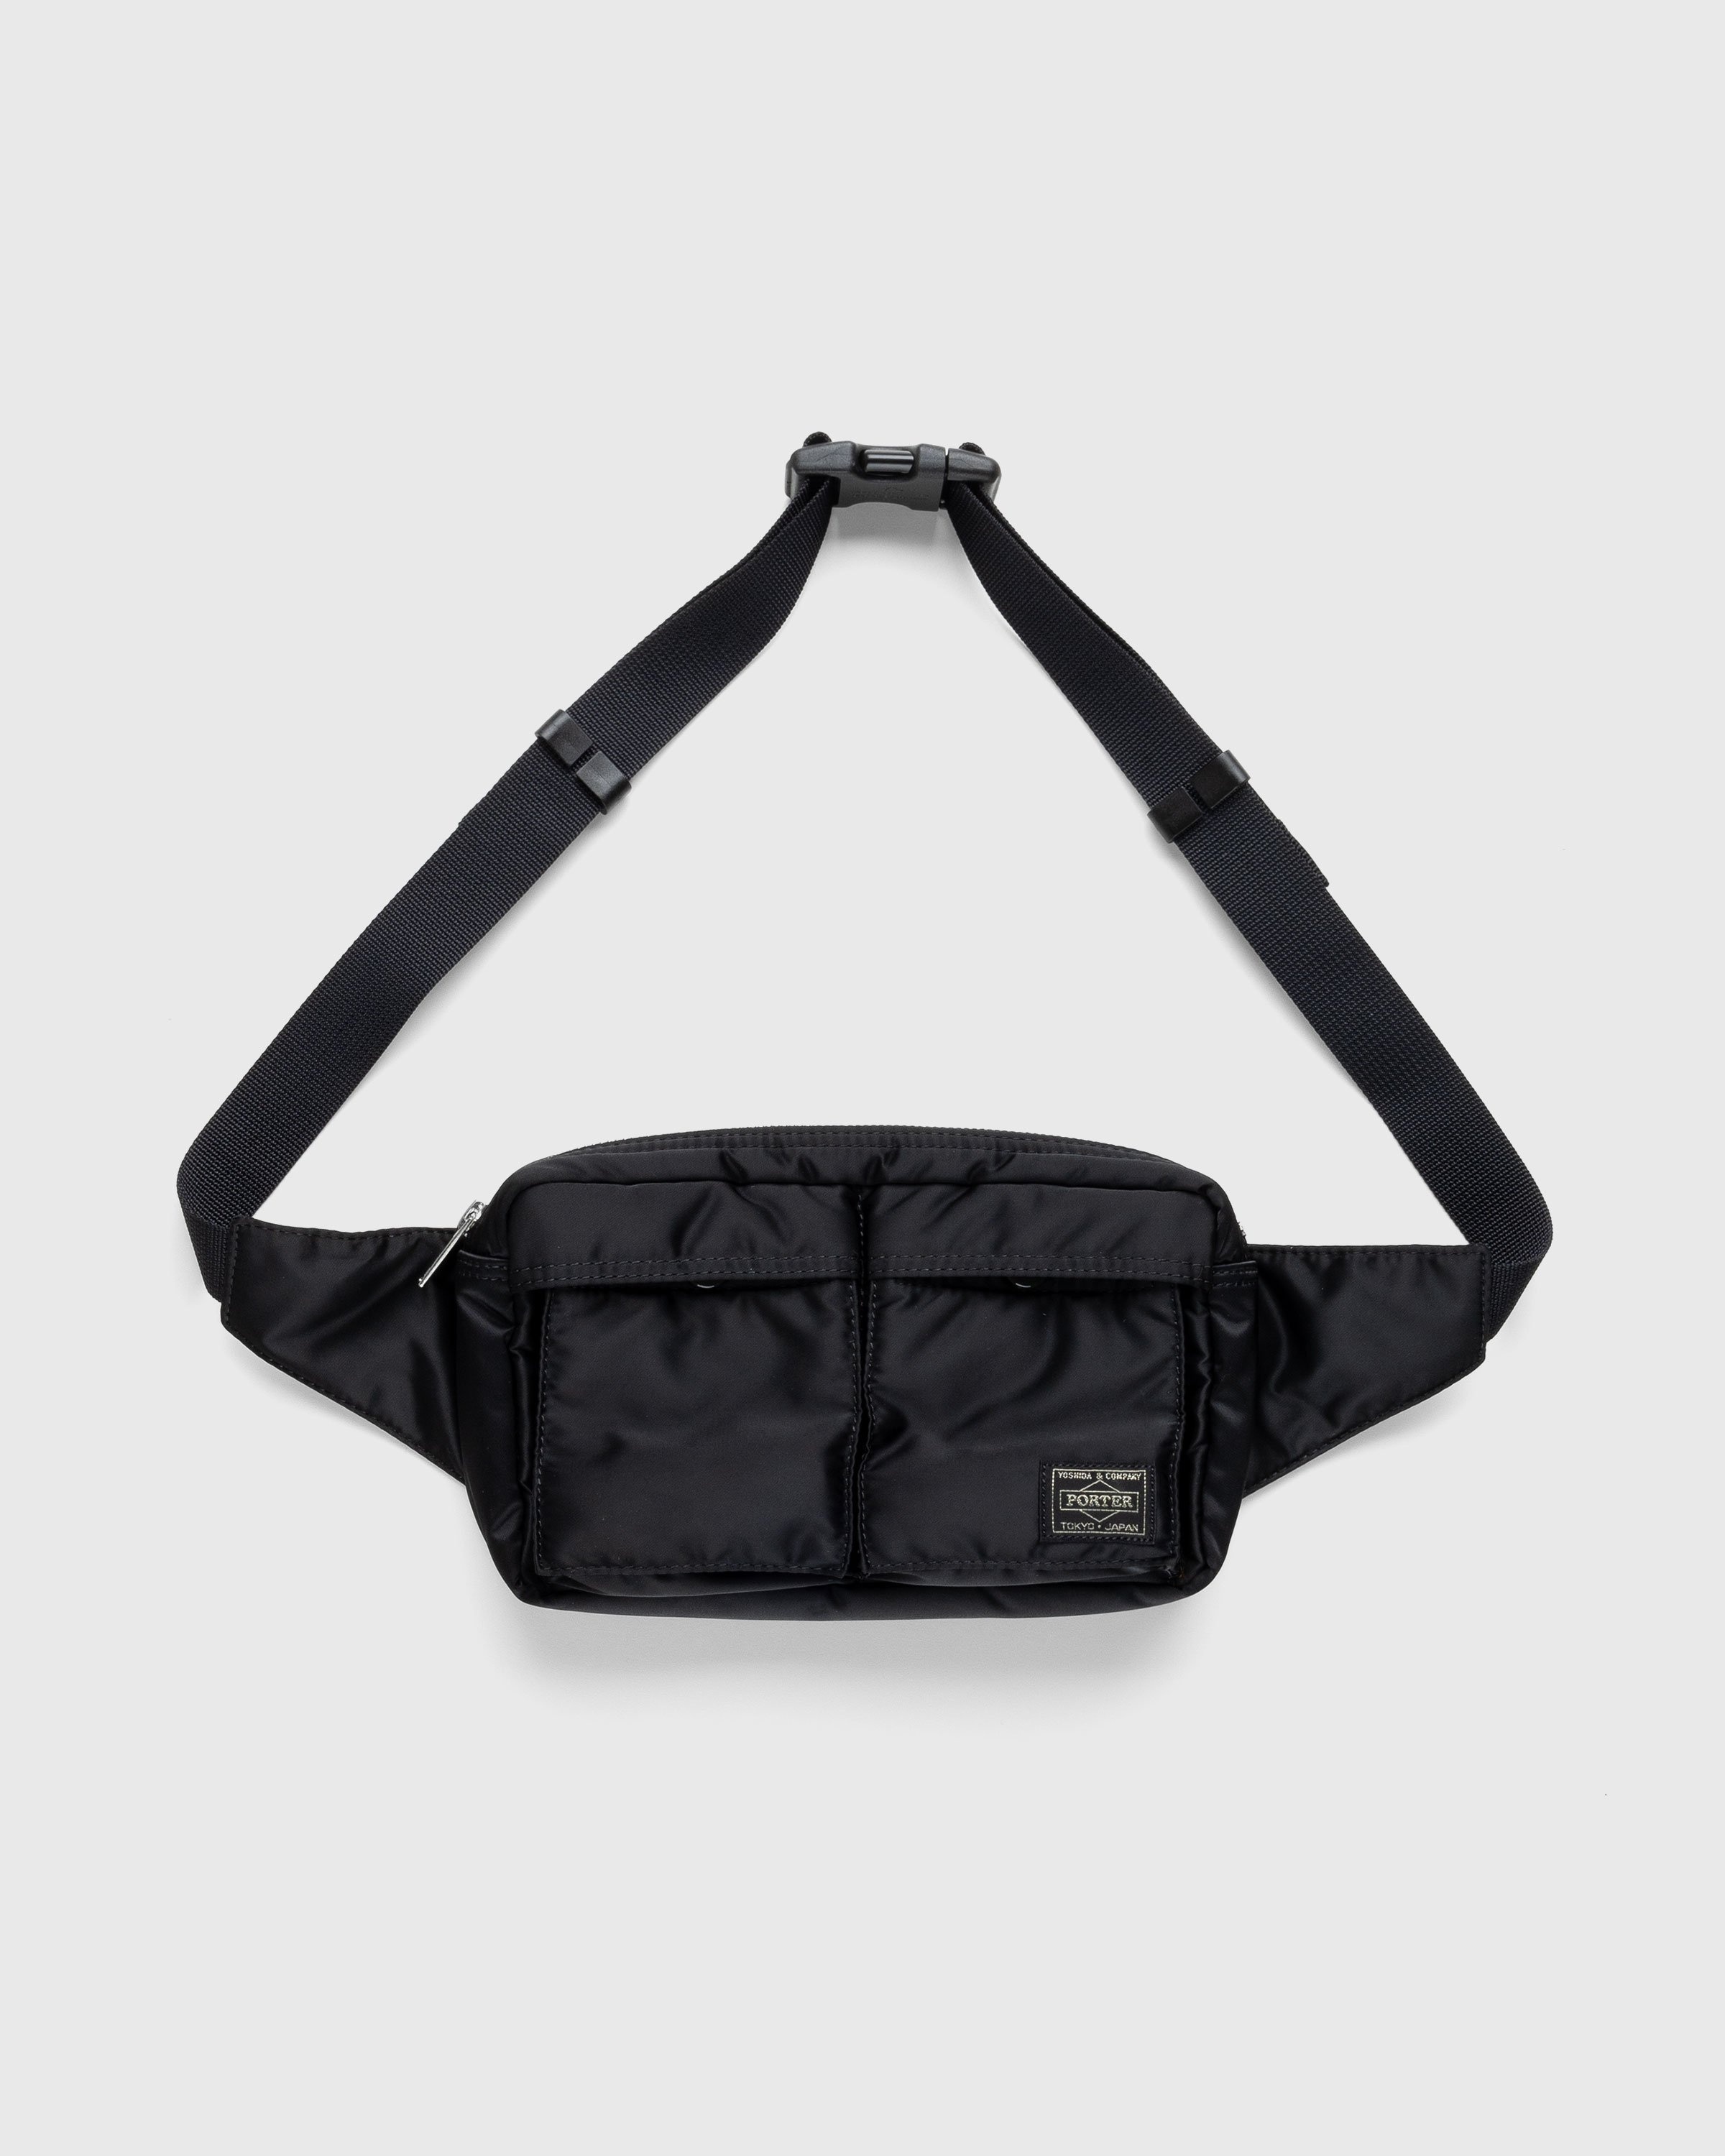 Porter Yoshida & Co. – Tanker Waist Bag Black   Highsnobiety Shop